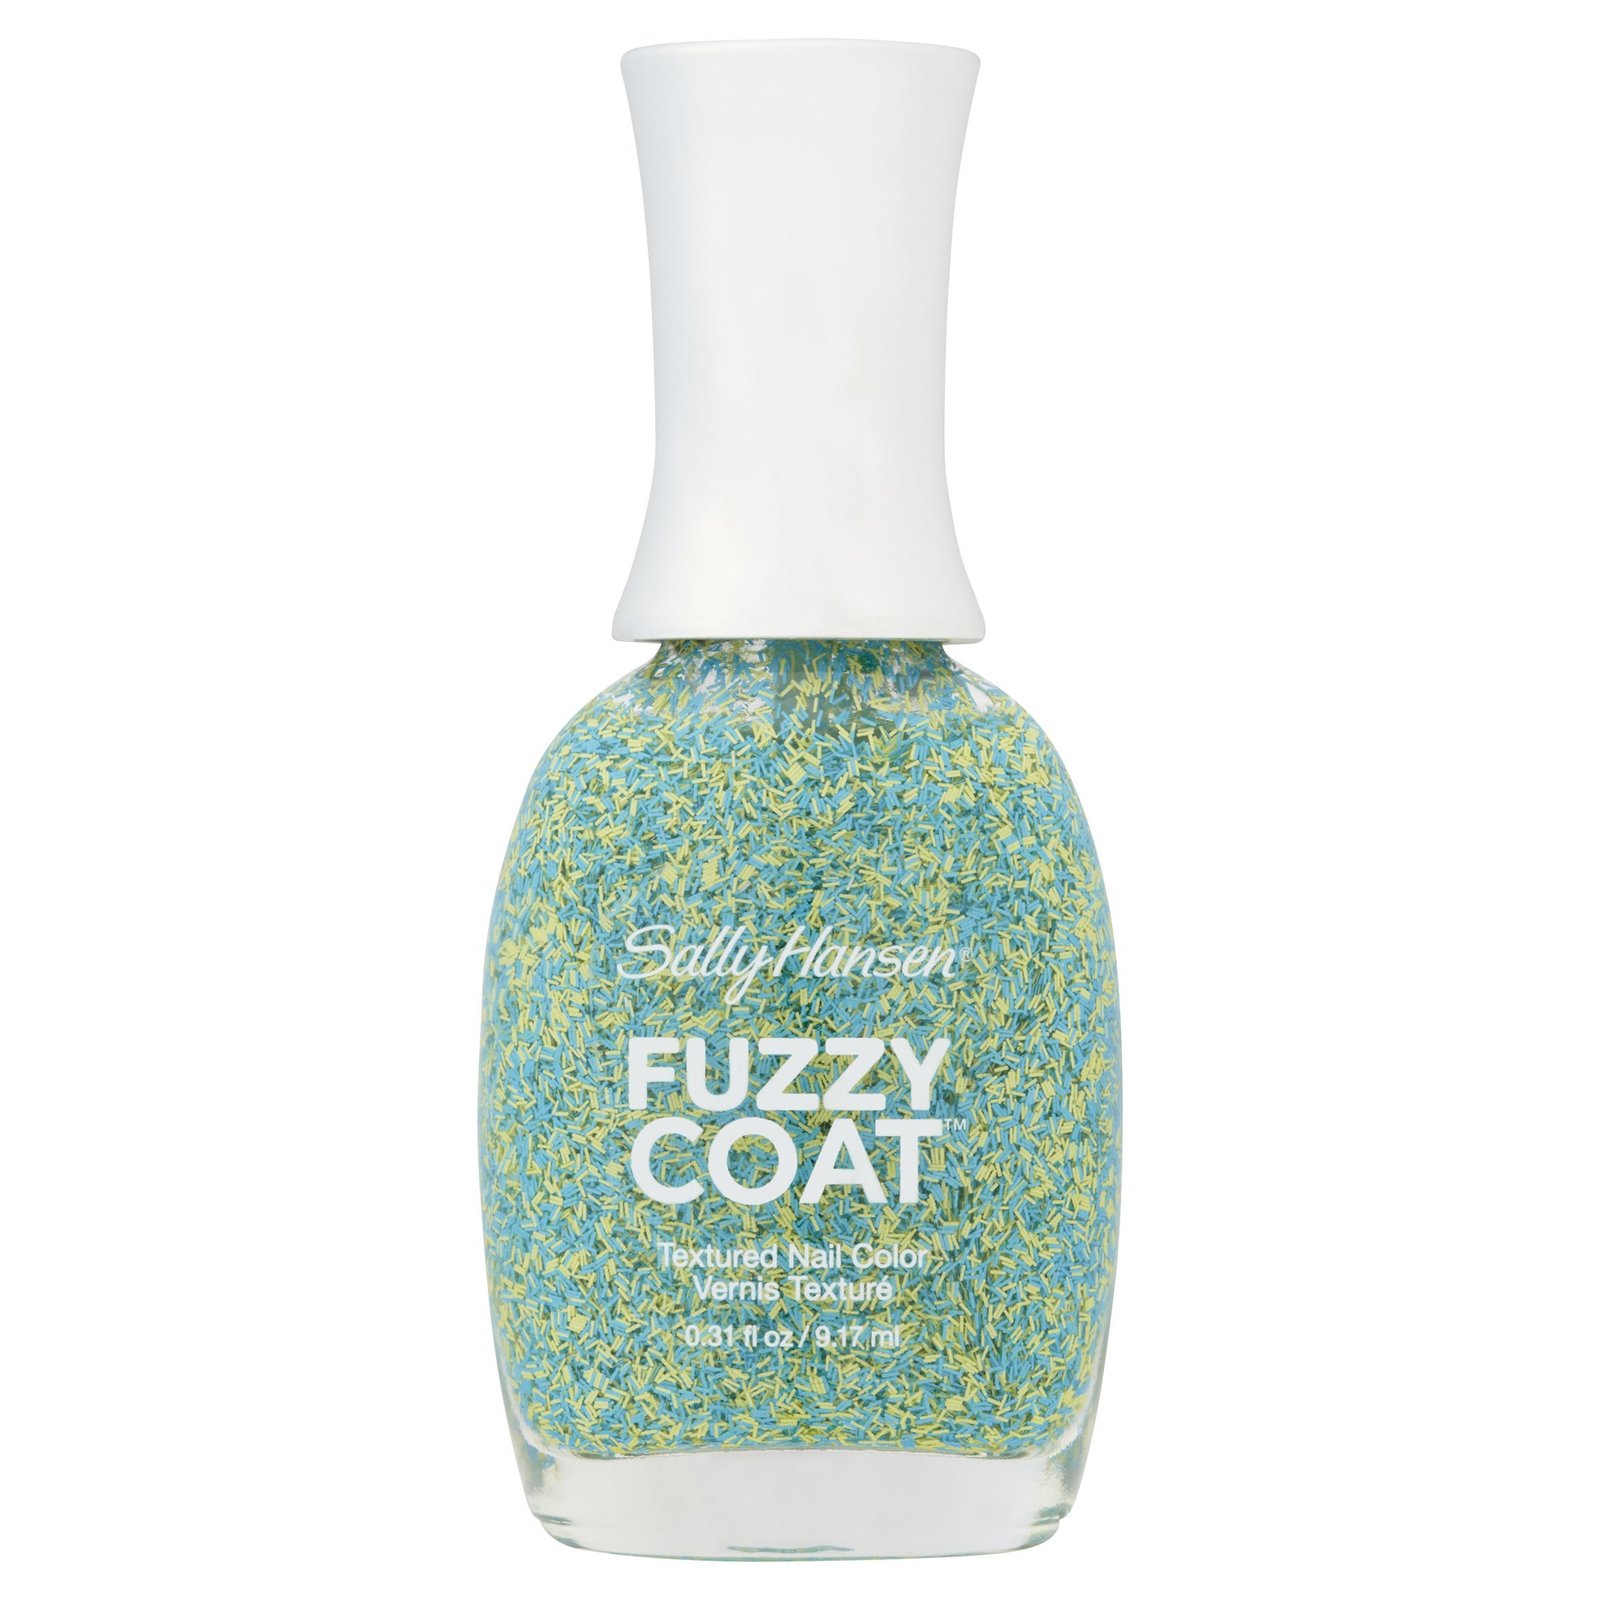 Sally Hansen Fuzzy Coat Textured Nail Color, Fuzz-Sea, 0.31 Fluid Ounce